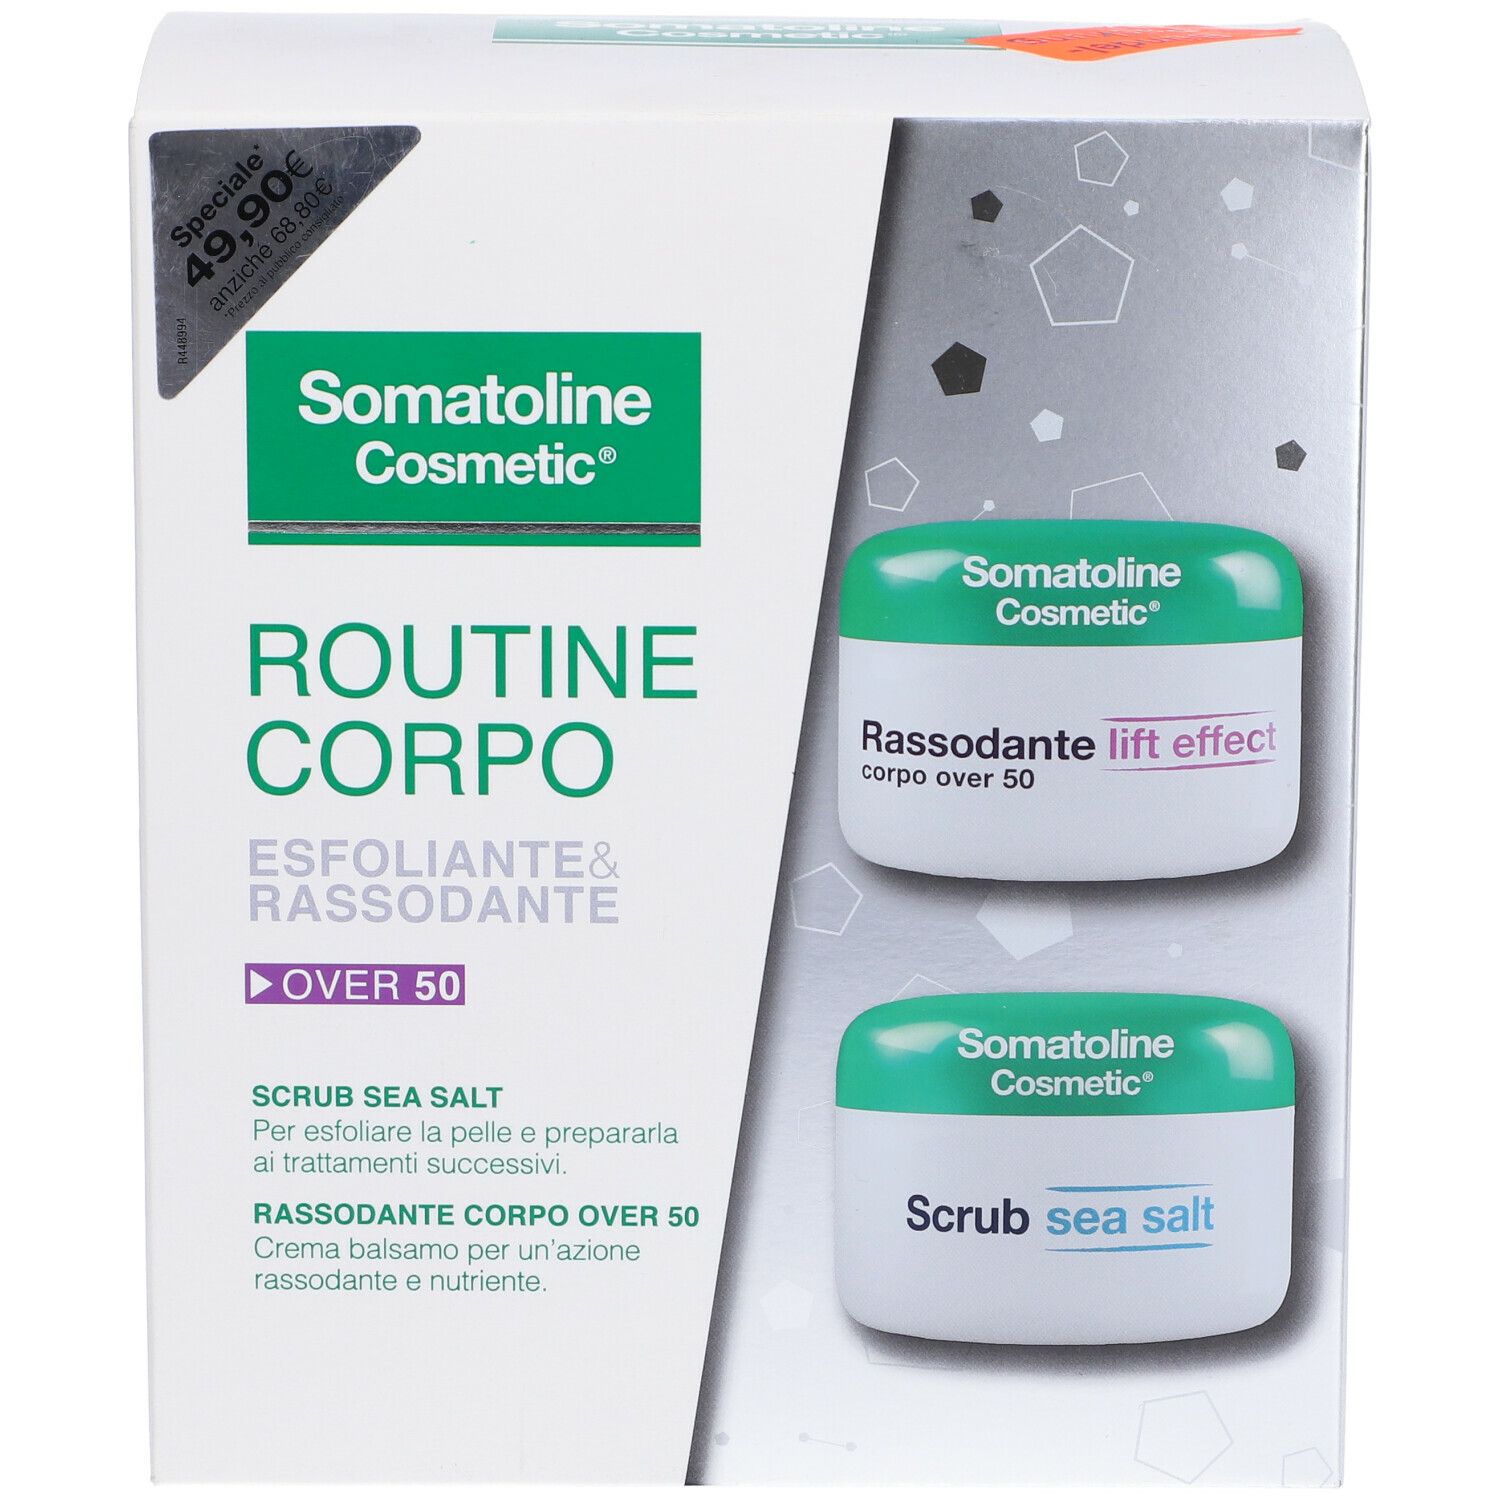 Somatoline Cosmetic® Routine Corpo